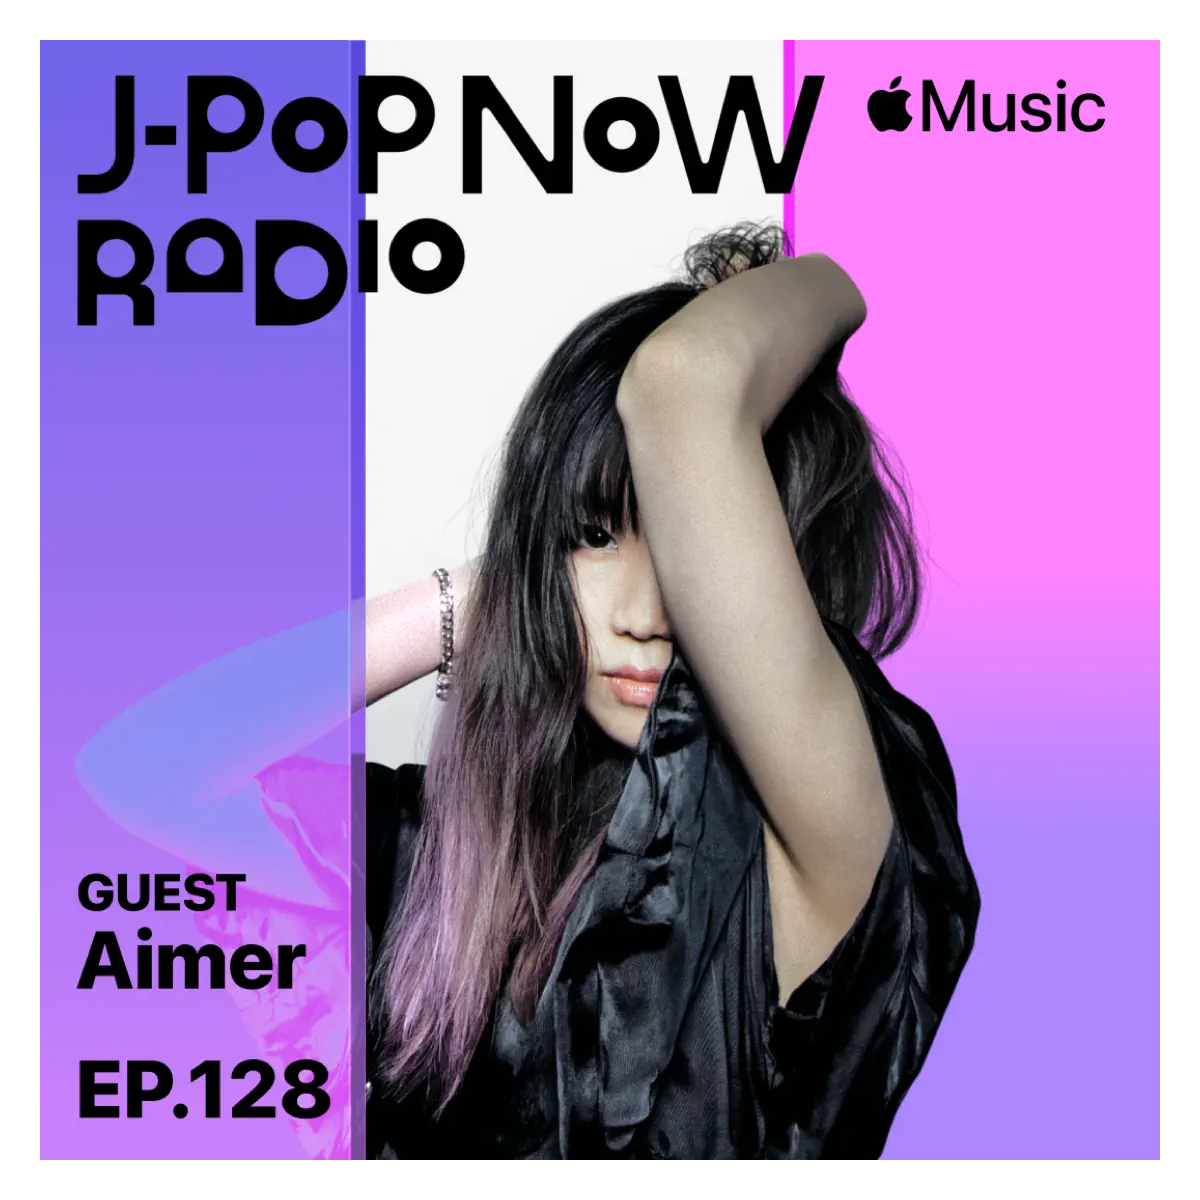 J-Pop Now Radio with Kentaro Ochiai ゲスト：Aimer